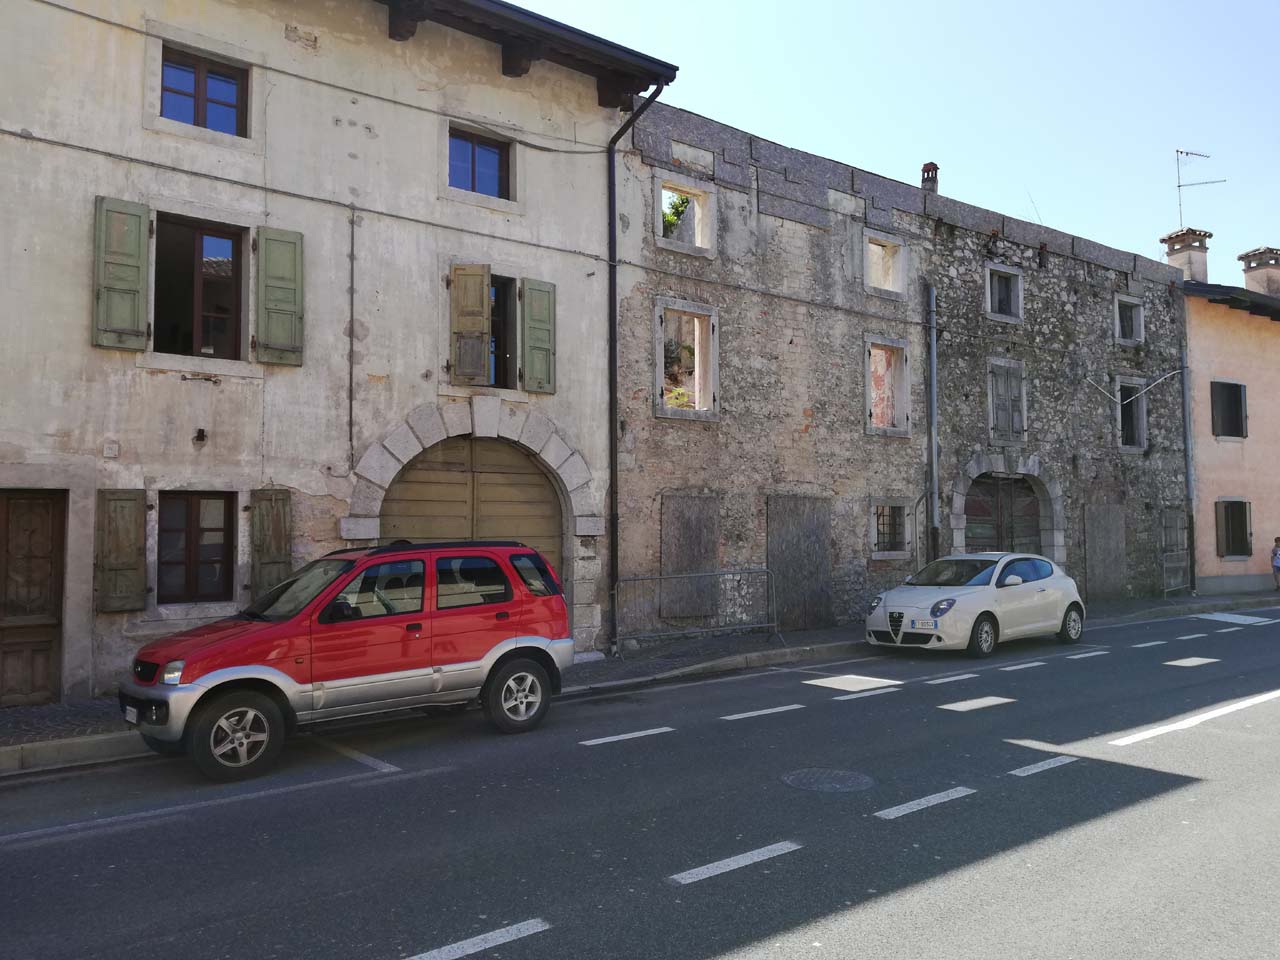 casa, rurale, in linea - Romans d'Isonzo (GO) 